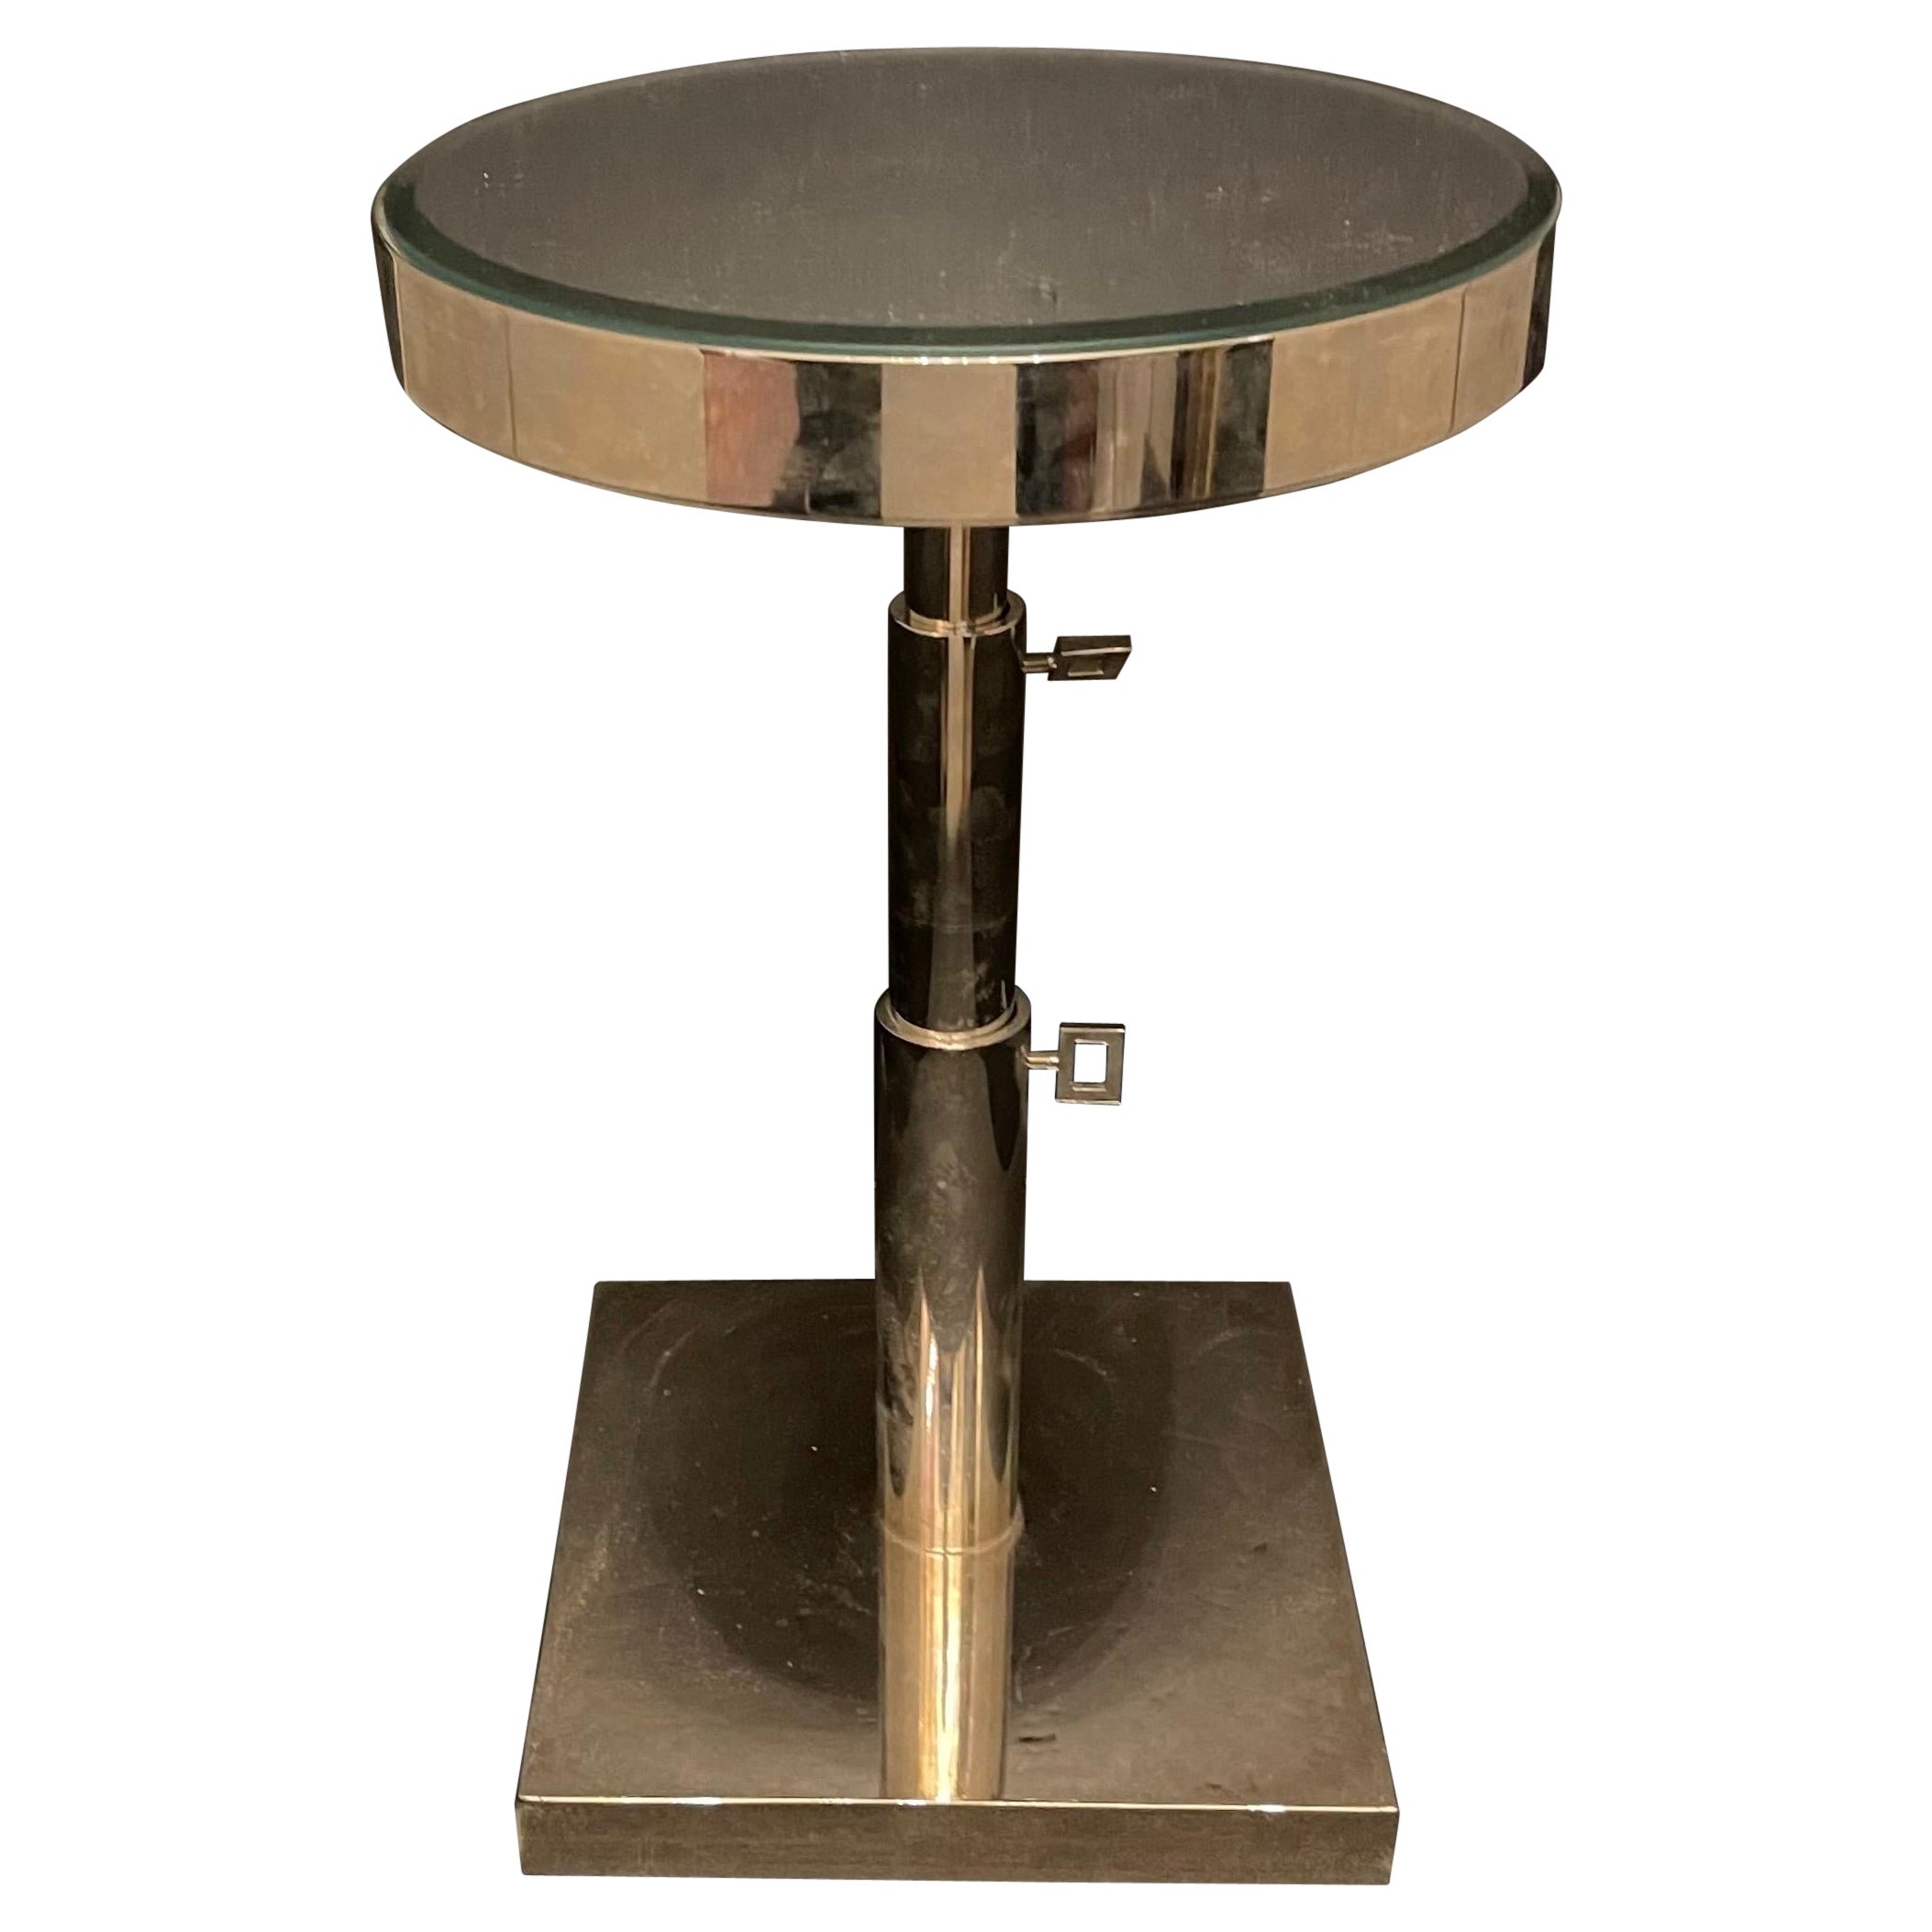 Merveilleuse table d'appoint télescopique Lorin Marsh en nickel poli avec plateau en miroir